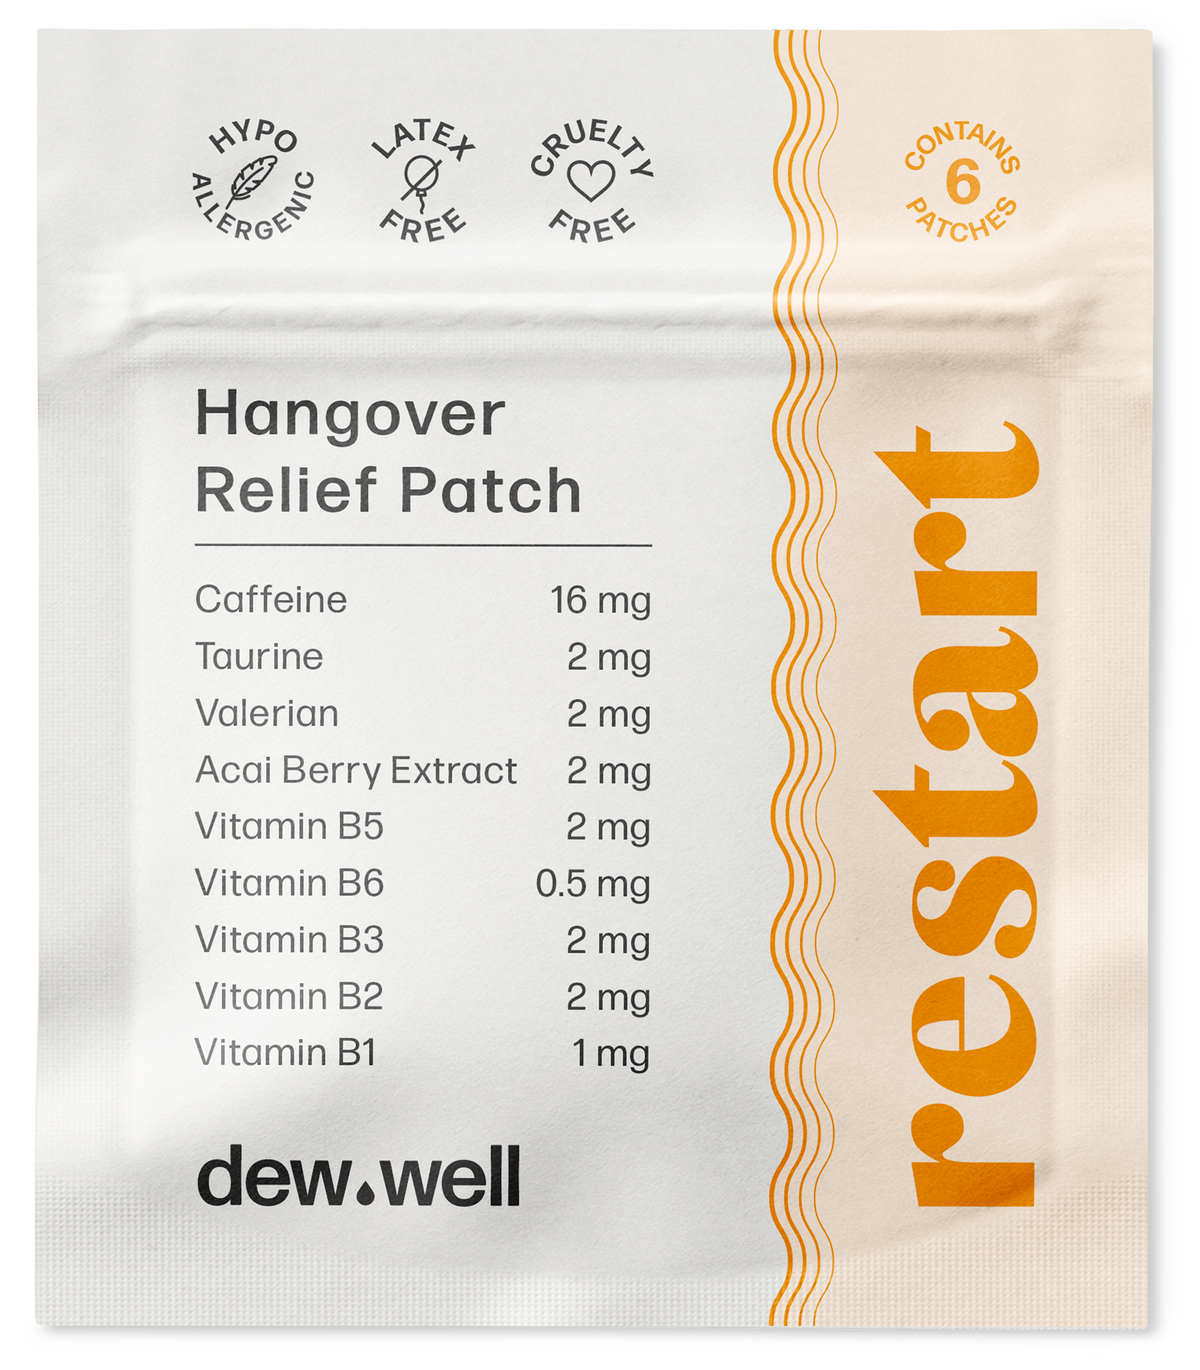 Hangover patch 12 pack - Sunrise Wellness